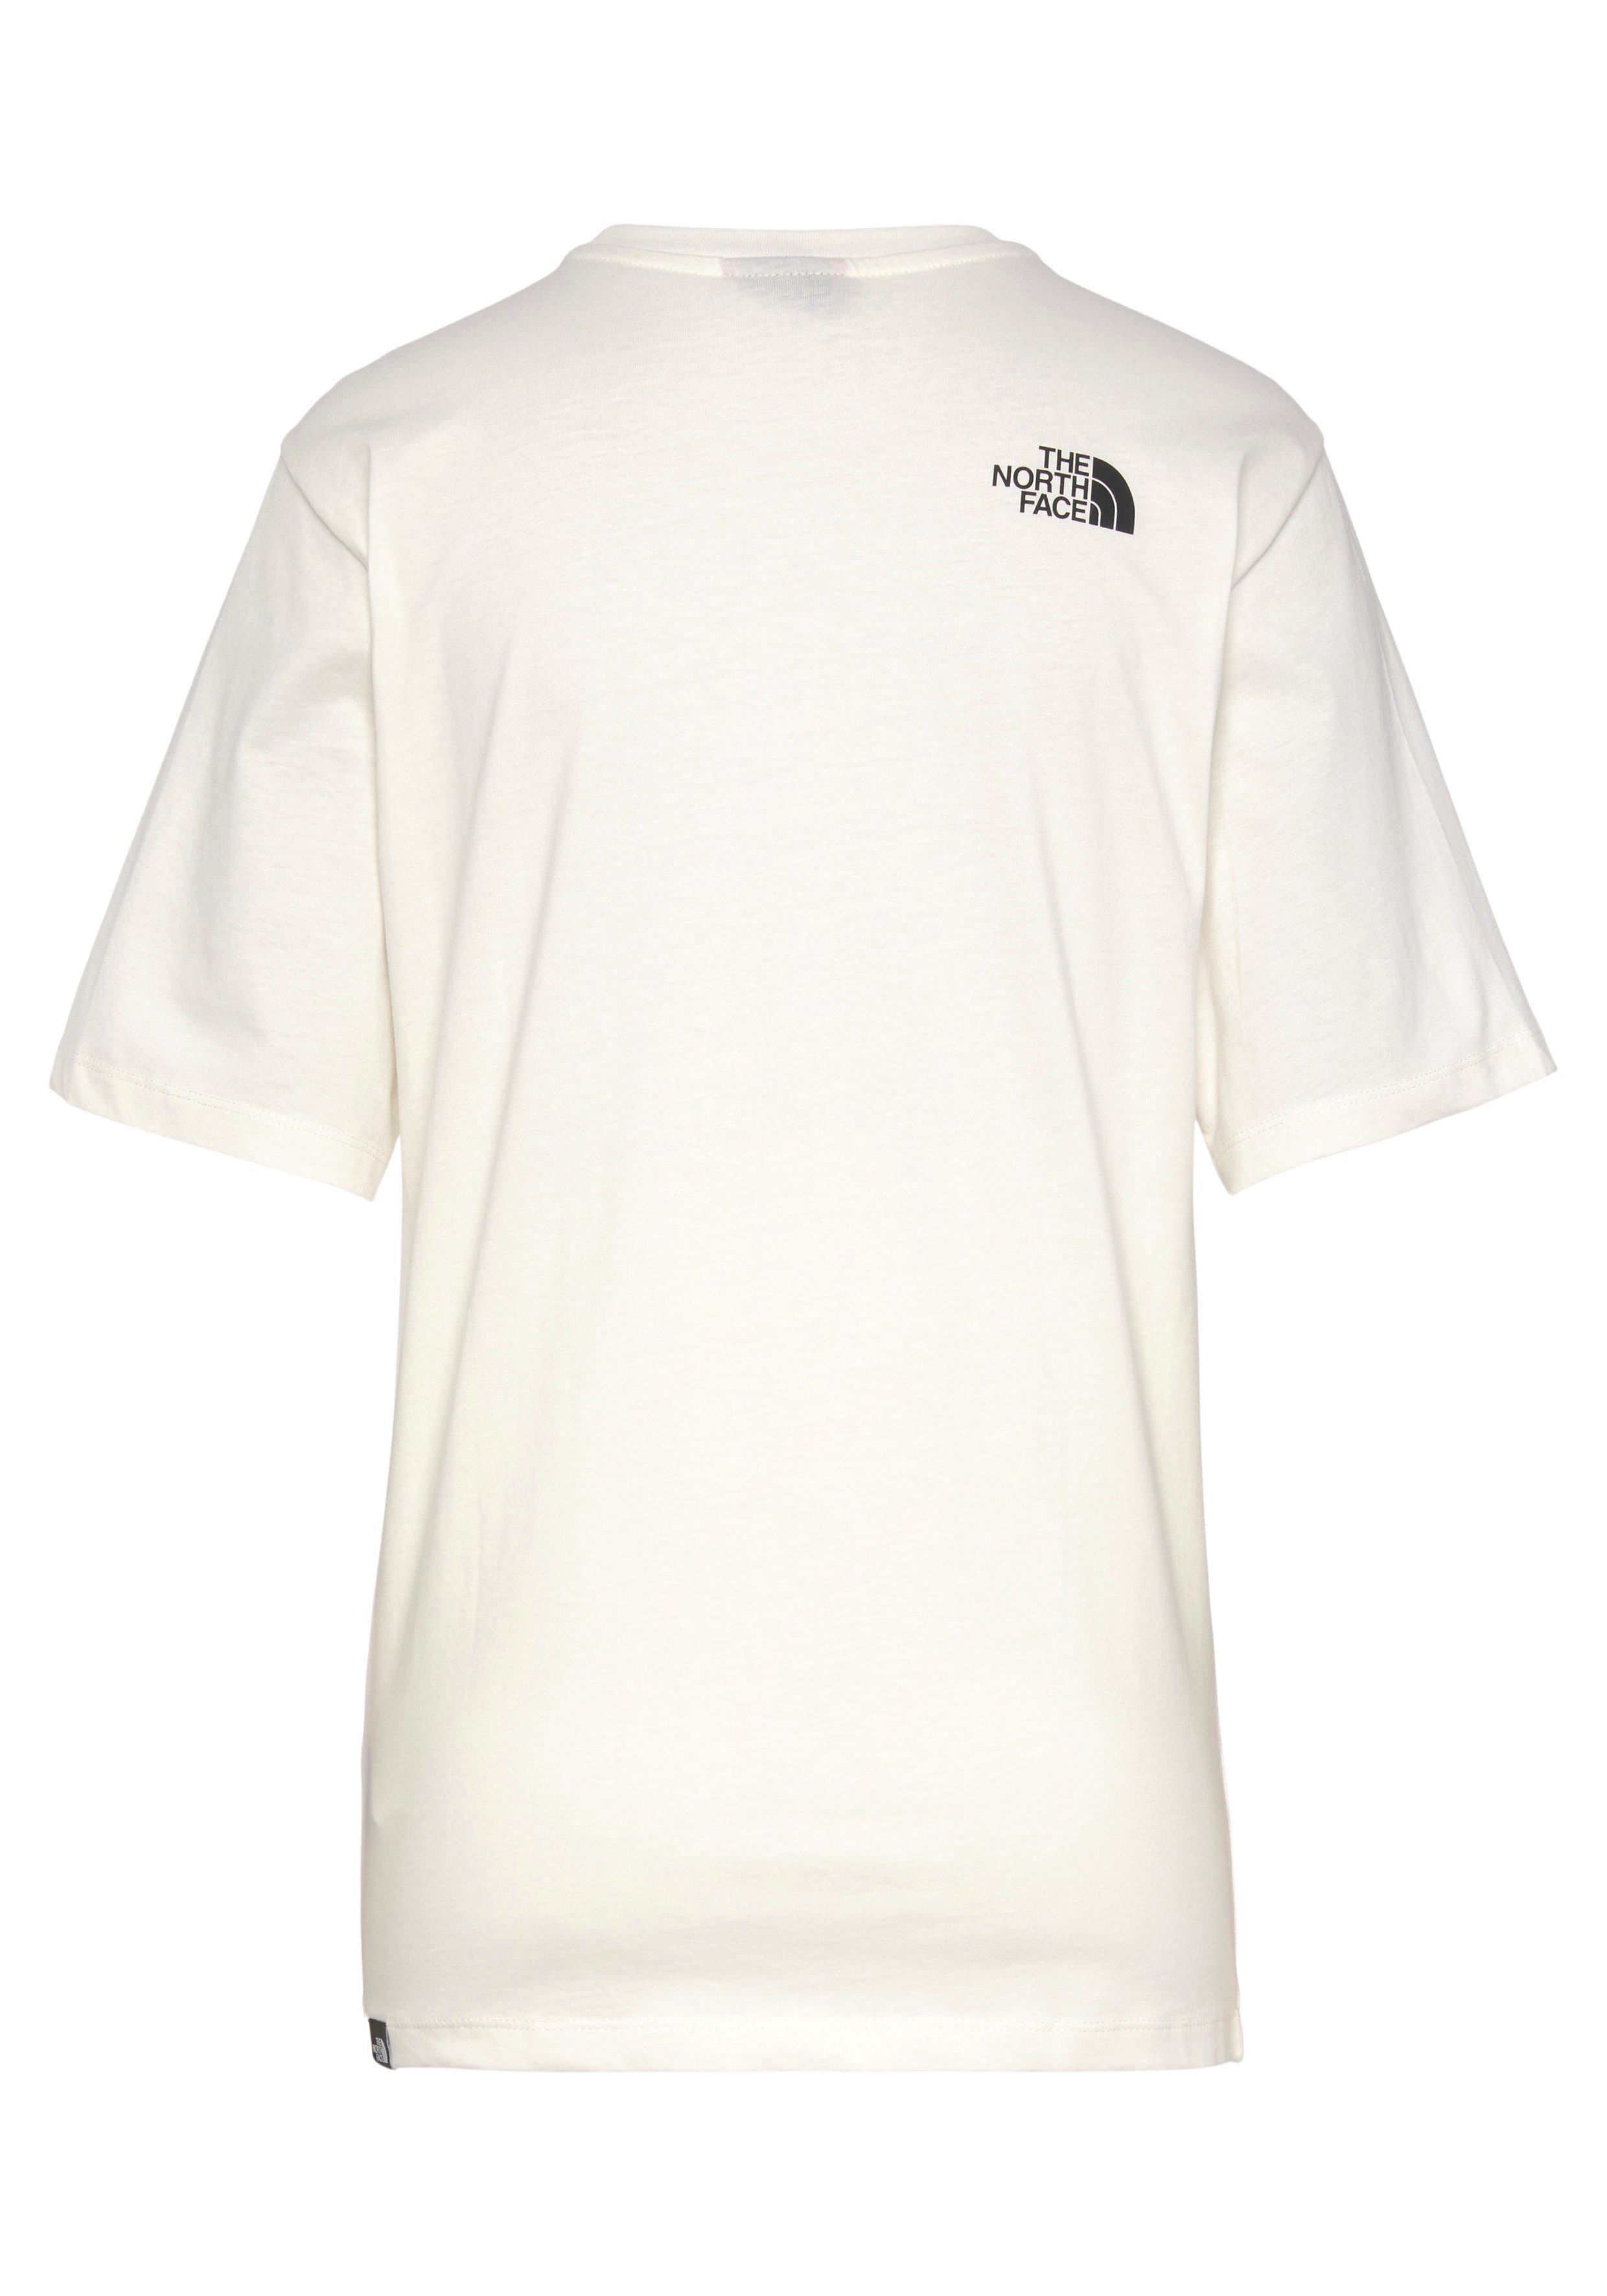 The North Brust W EASY mit white TEE der auf RELAXED Face Logodruck T-Shirt